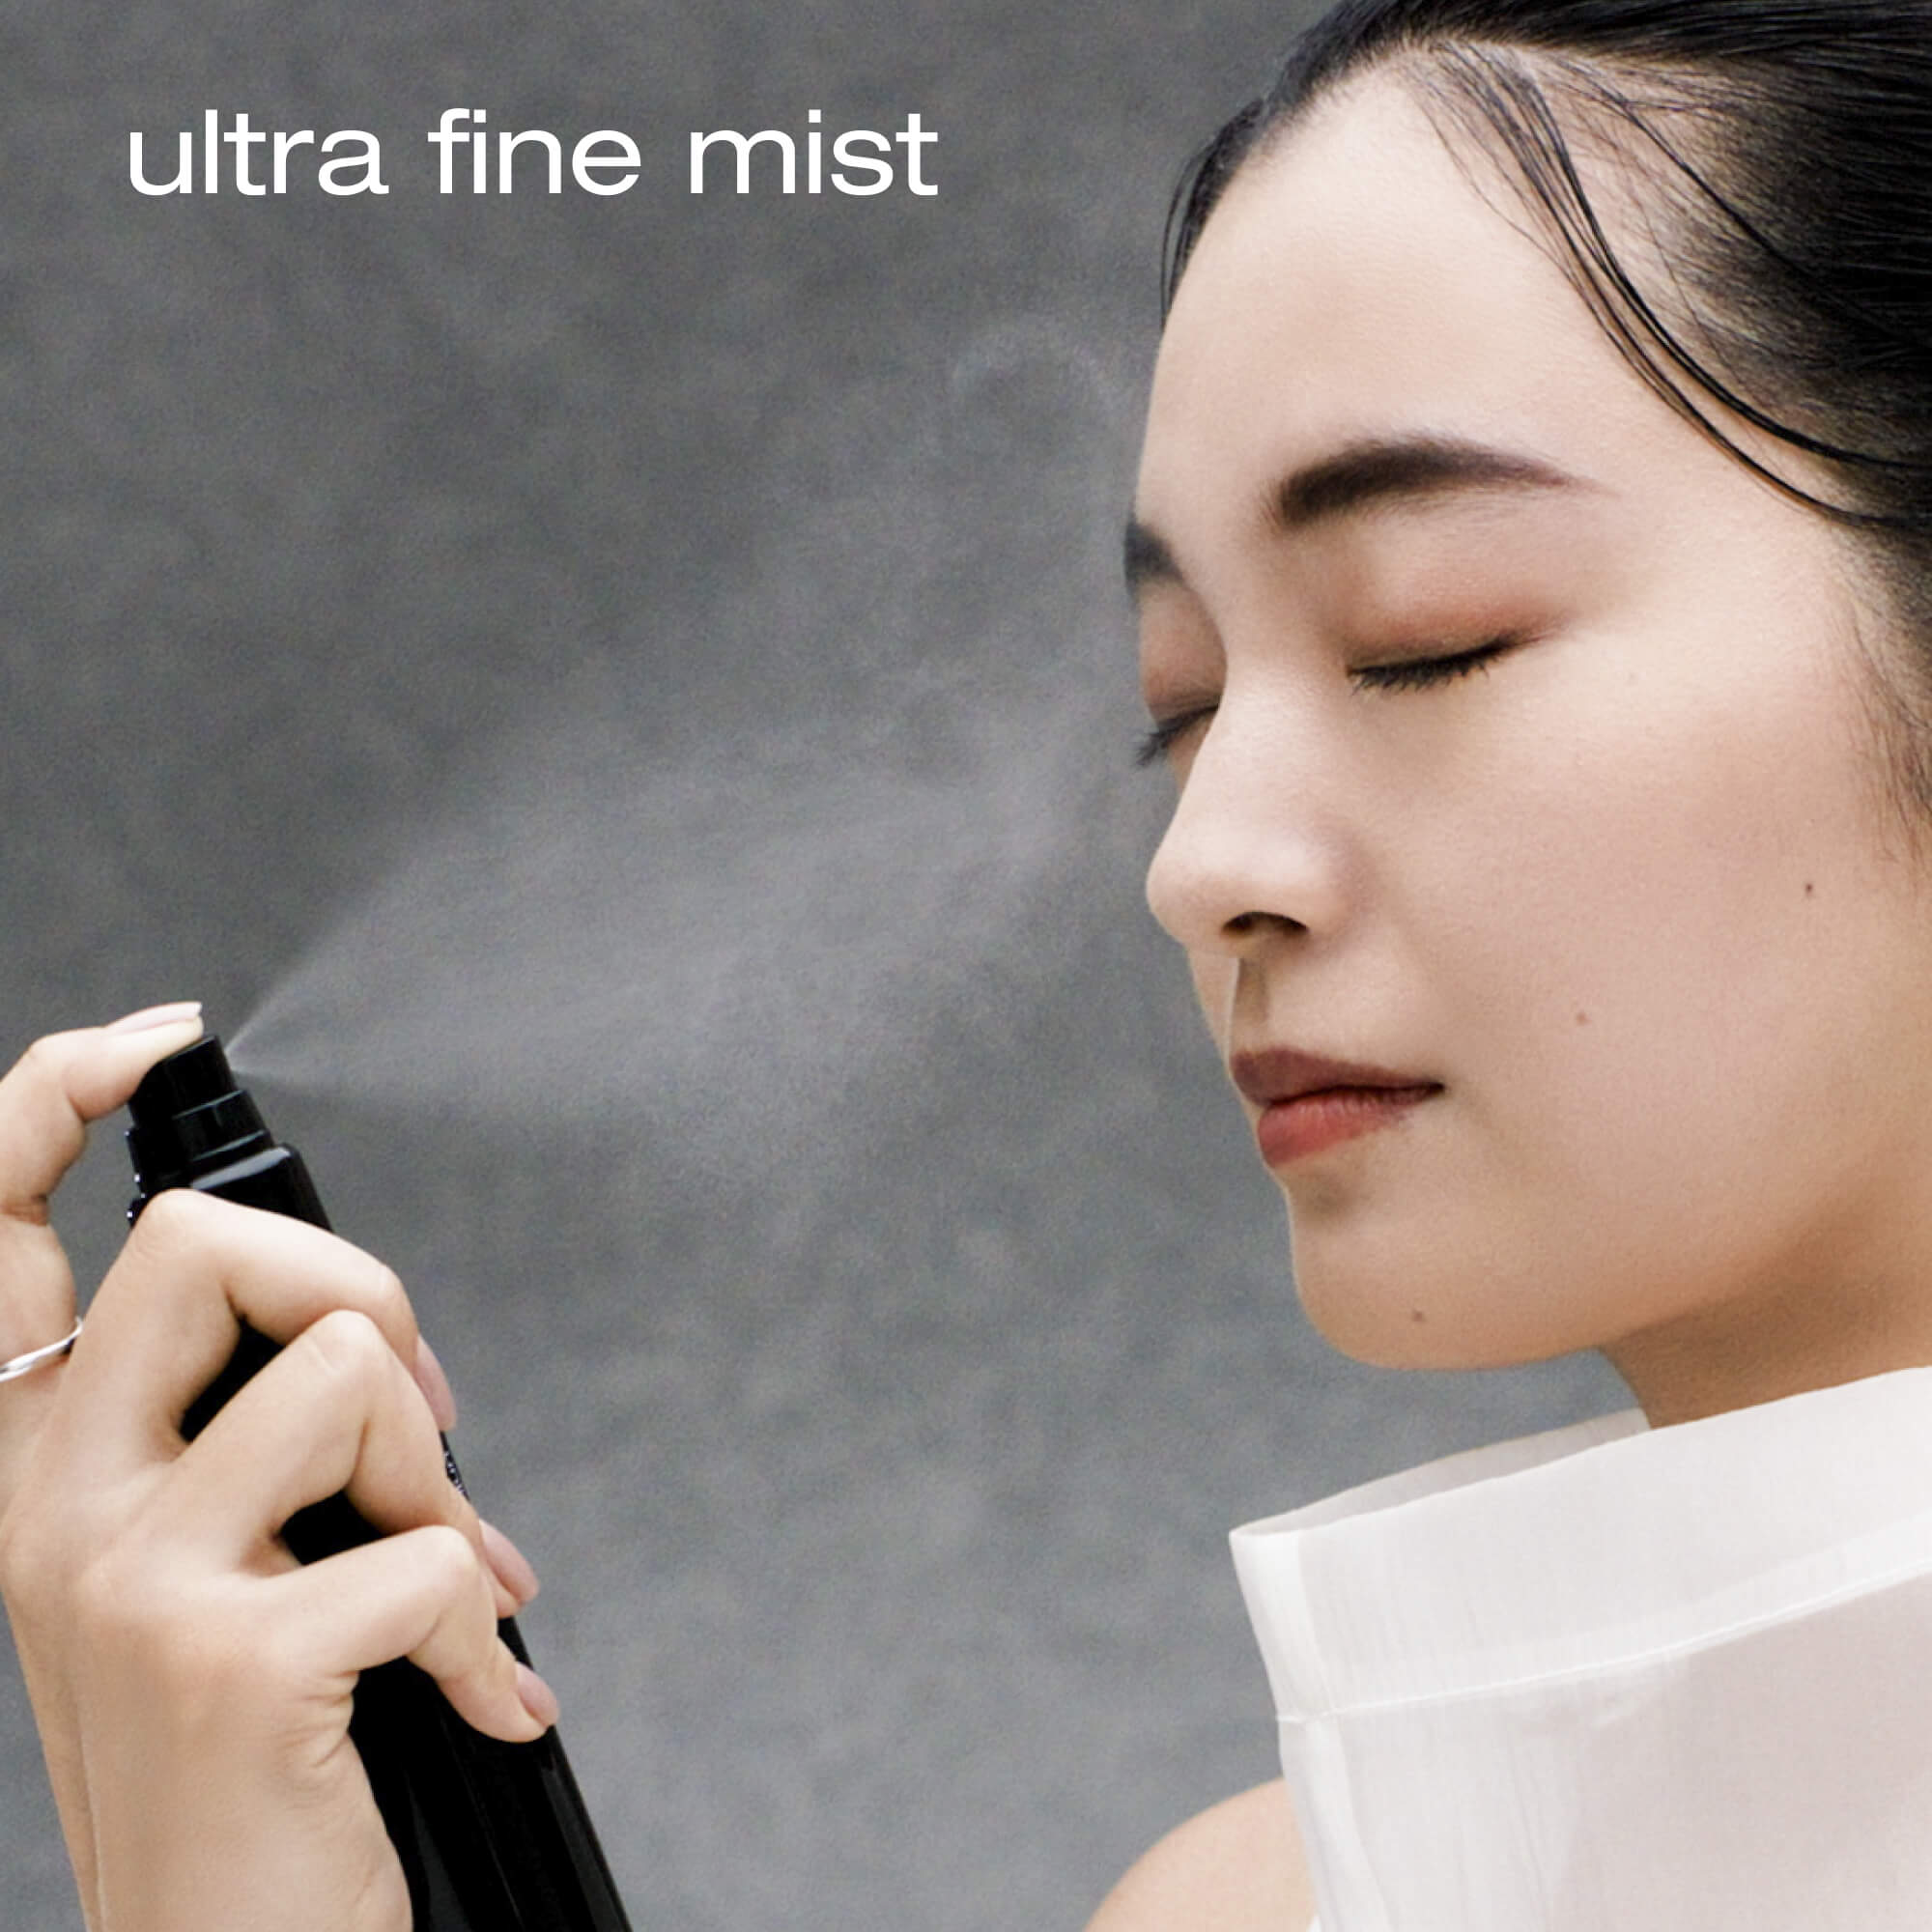 unlimited mattifying makeup fix mist